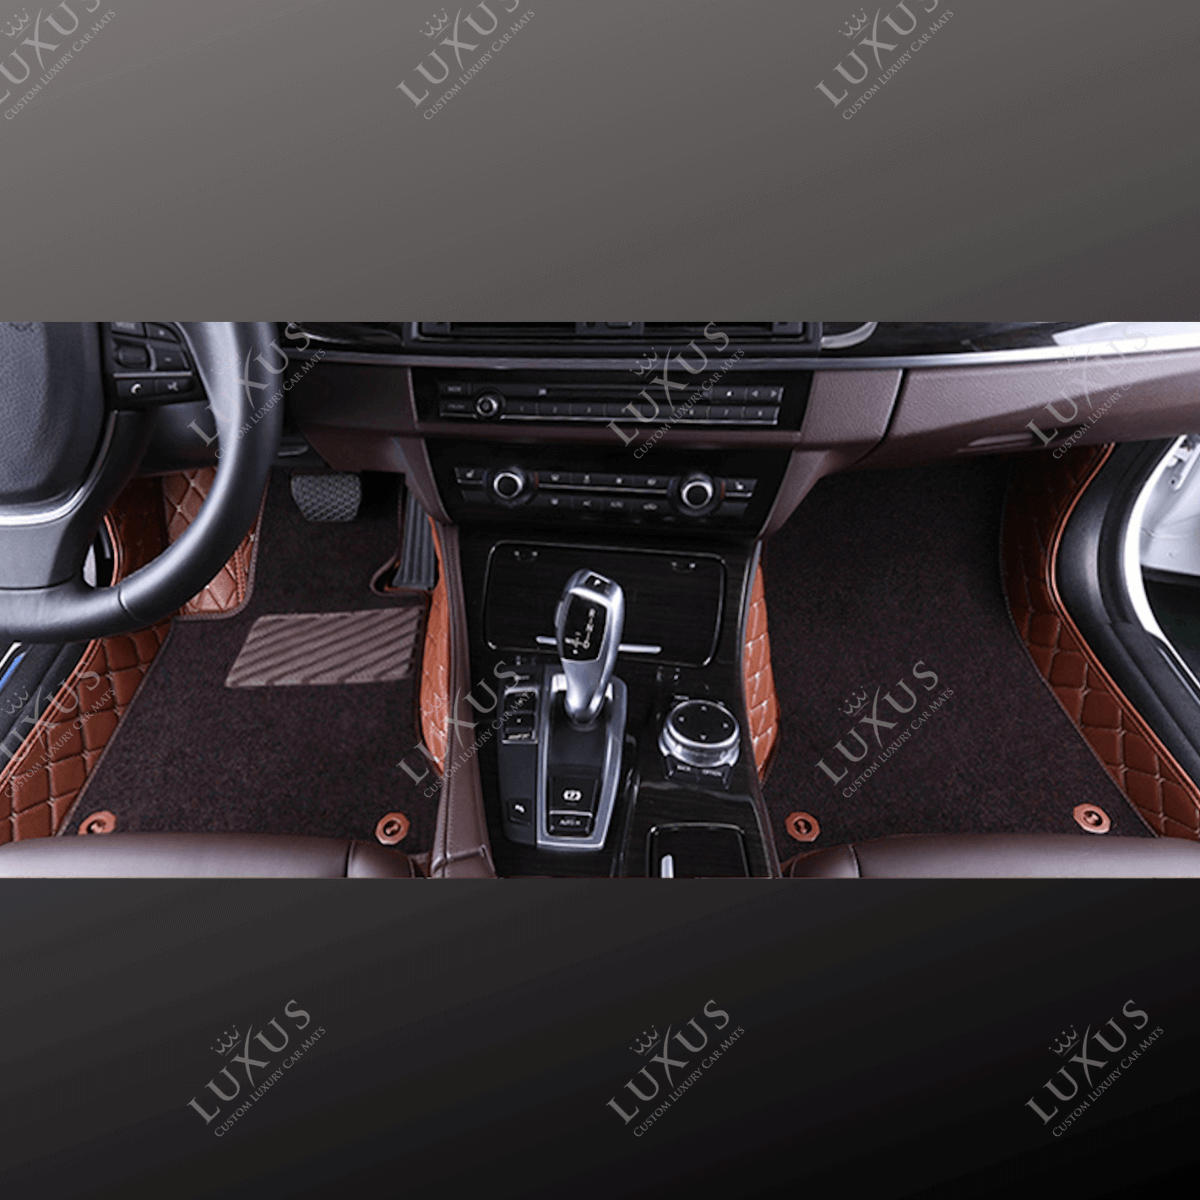 Caramel Brown Base & Brown Top Carpet Double Layer Luxury Car Mats Set